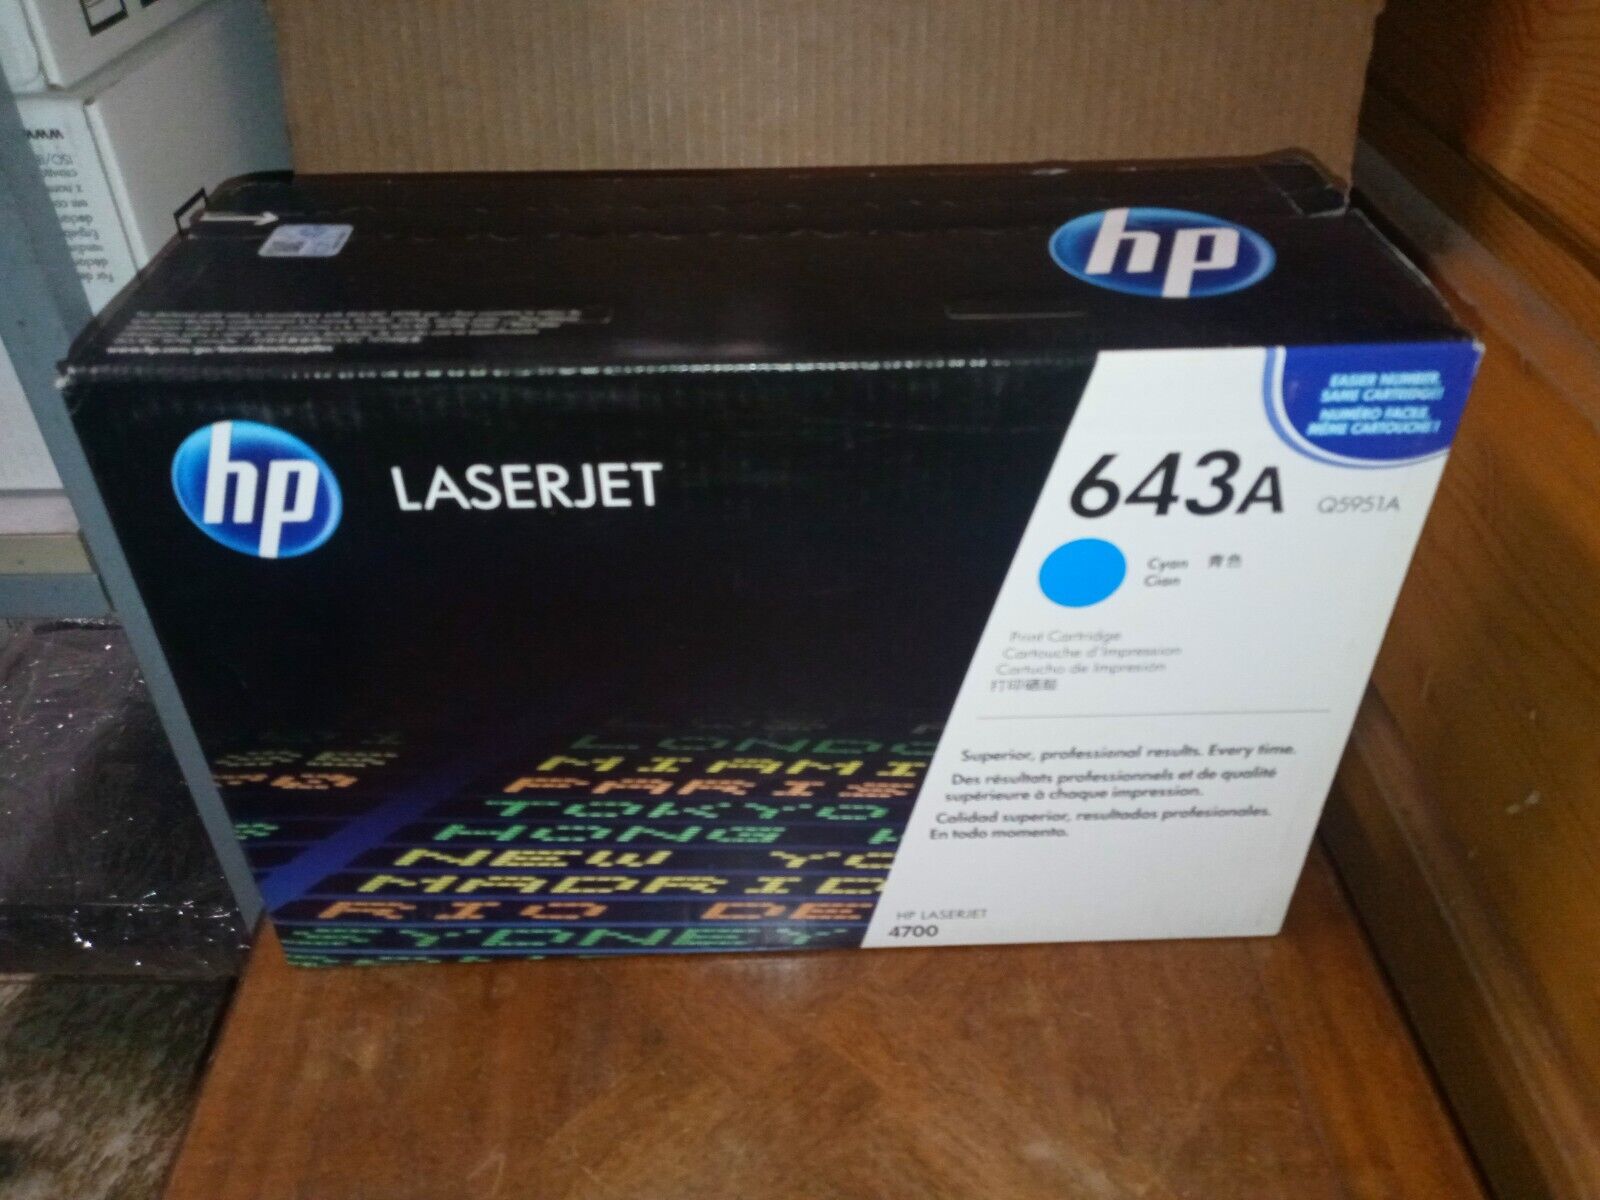 NEW Genuine HP Q5951A Cyan Toner Print Cartridge 643A for LaserJet 4700 Sealed